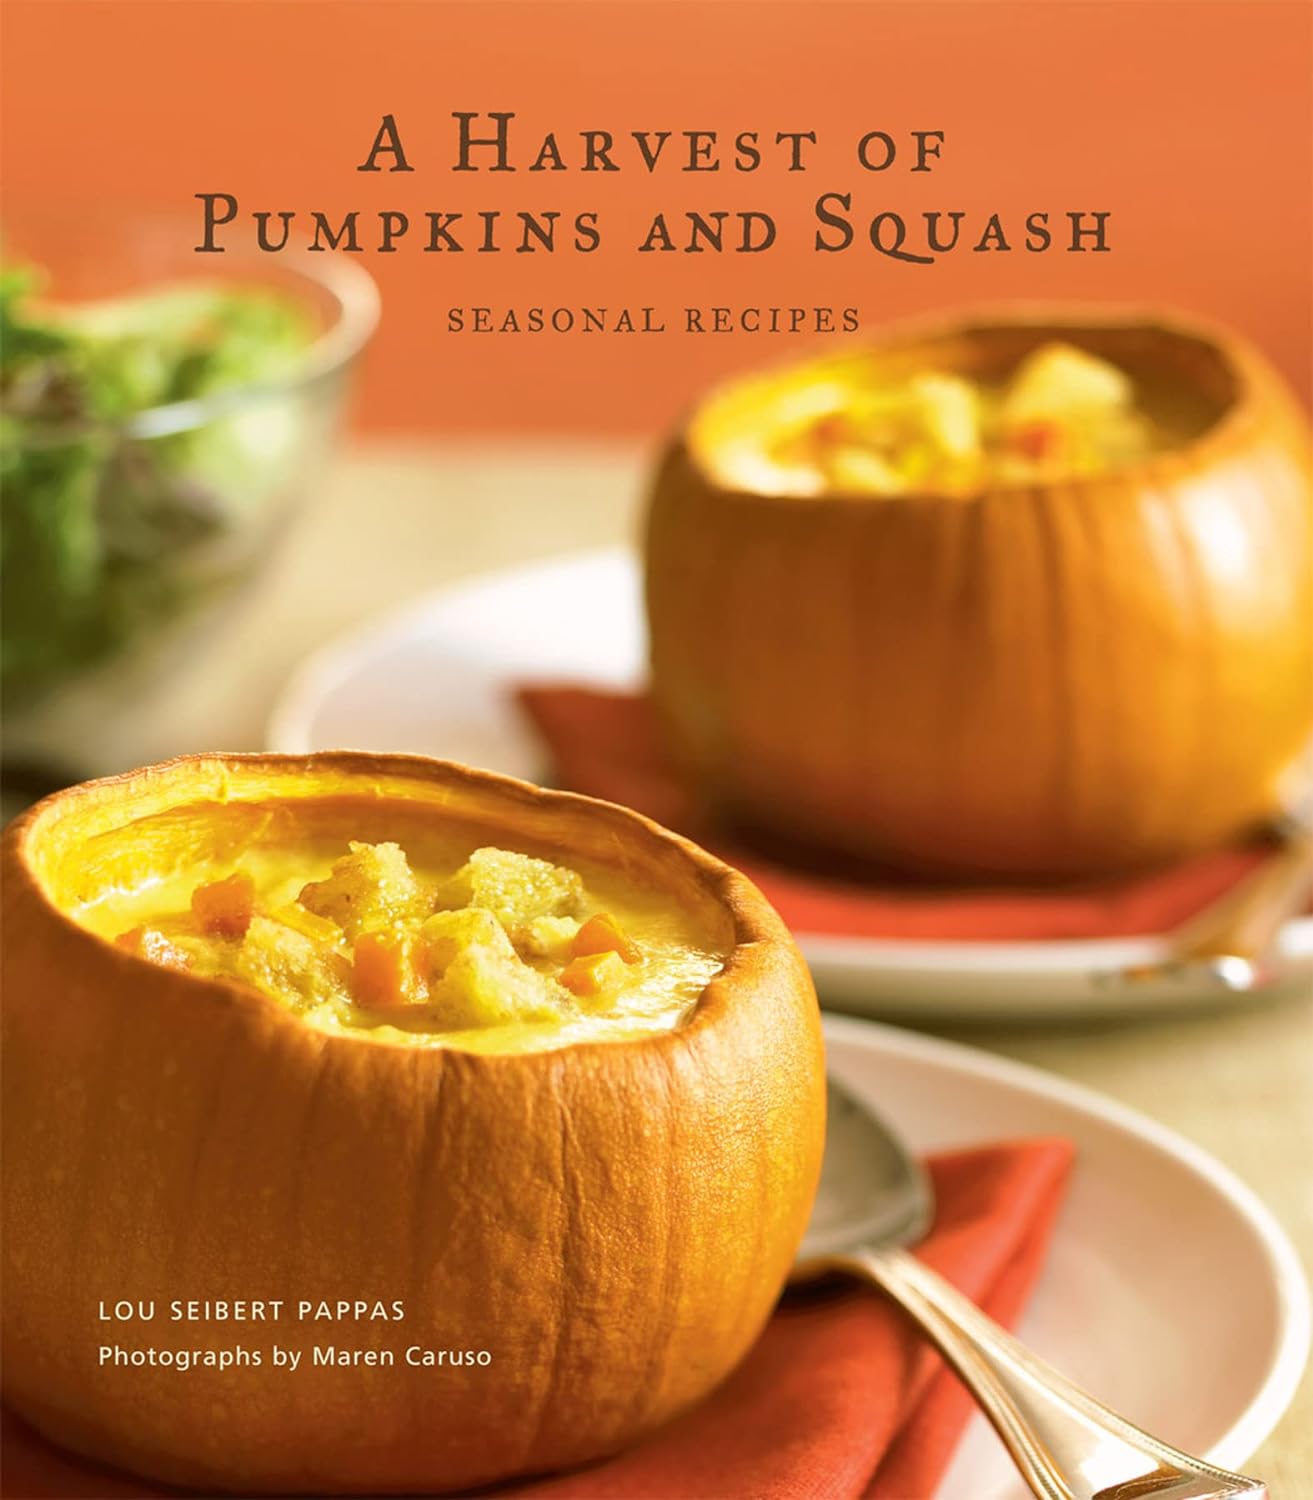 A Harvest of Pumpkins and Squash: Seasonal Recipes (Lou Seibert Pappas)